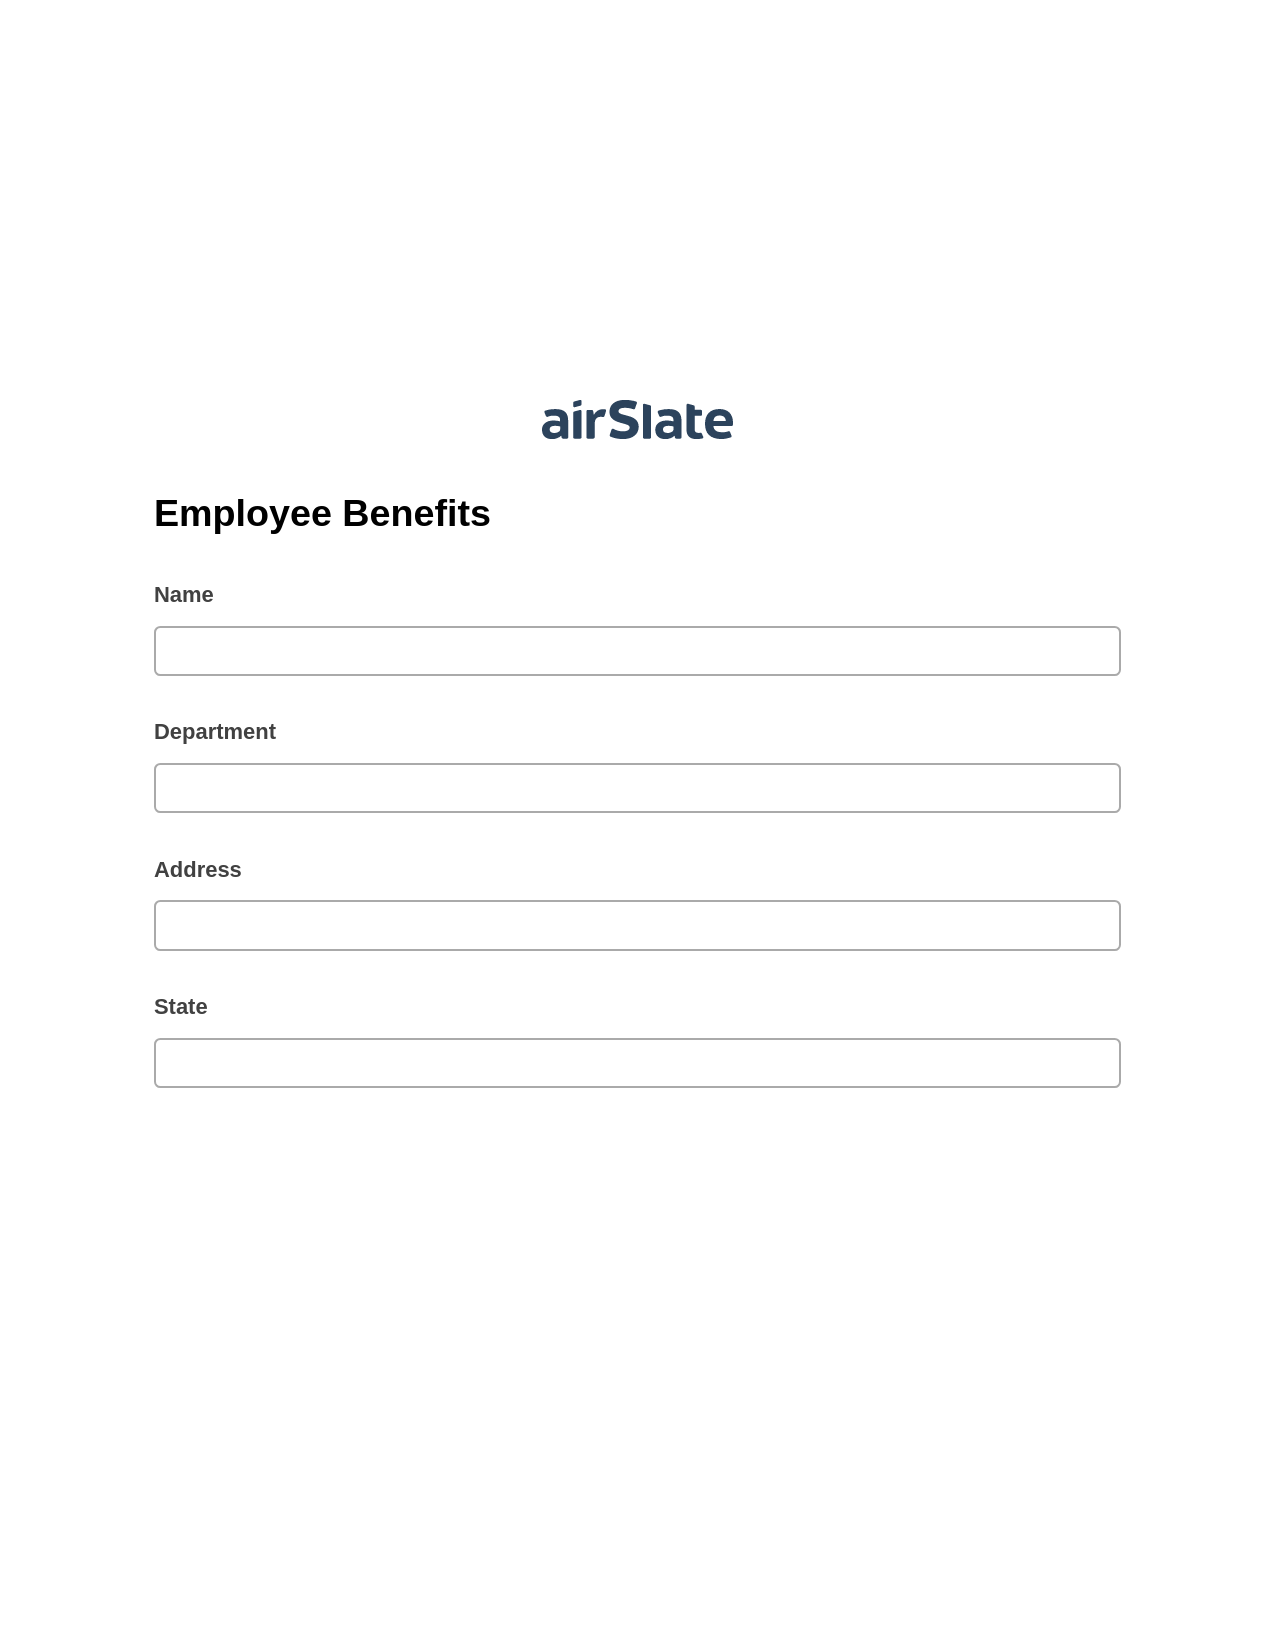 Multirole Employee Benefits Pre-fill from Salesforce Record Bot, Audit Trail Bot, Google Drive Bot